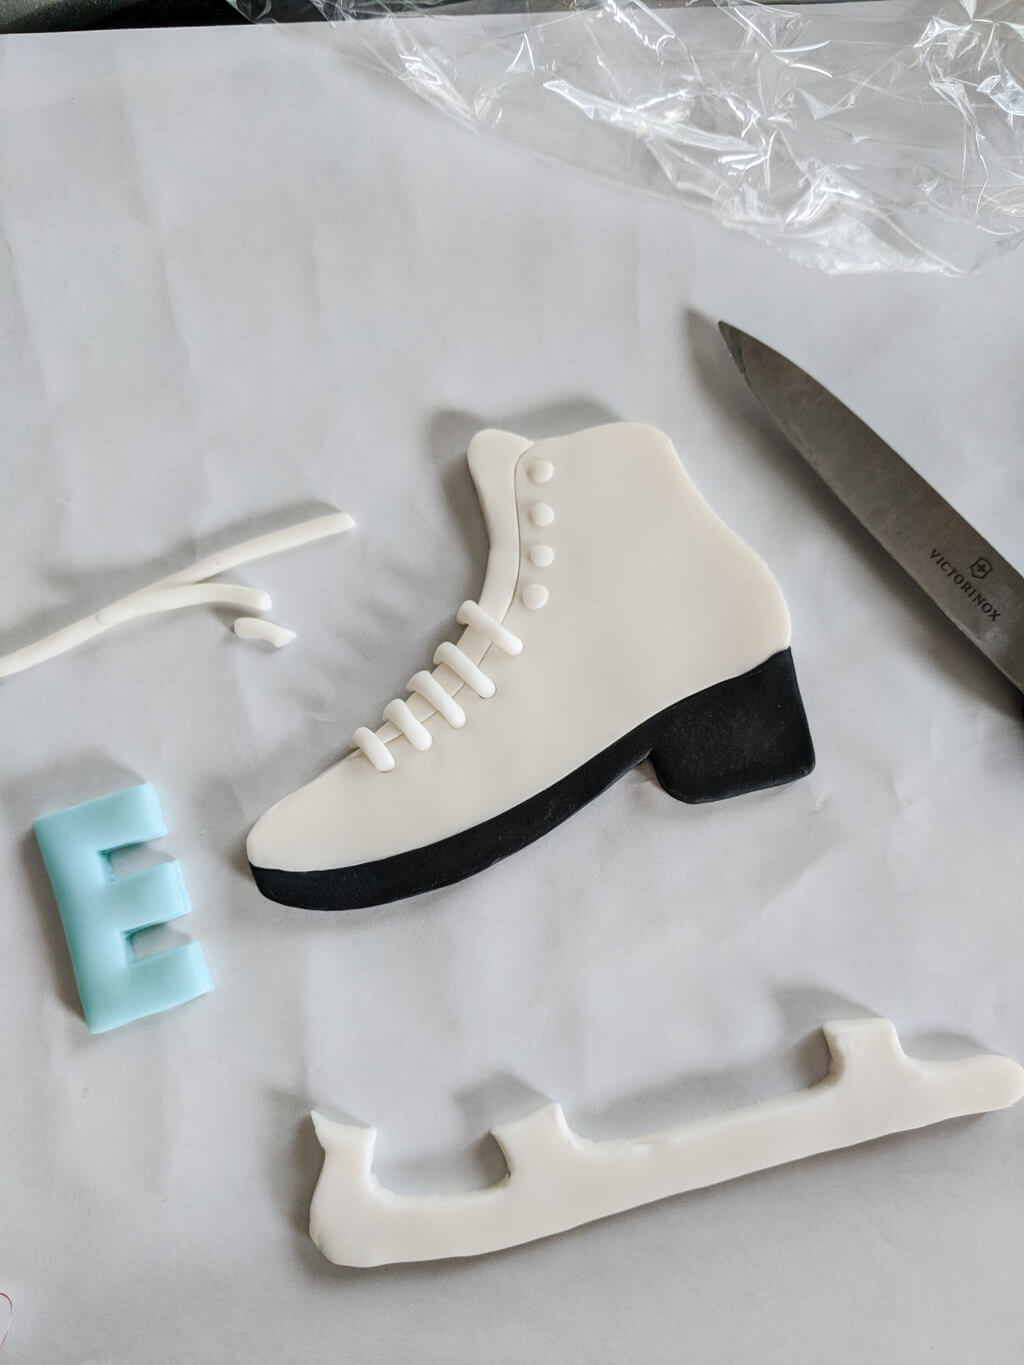 How to make a DIY fondant ice skate cake topper